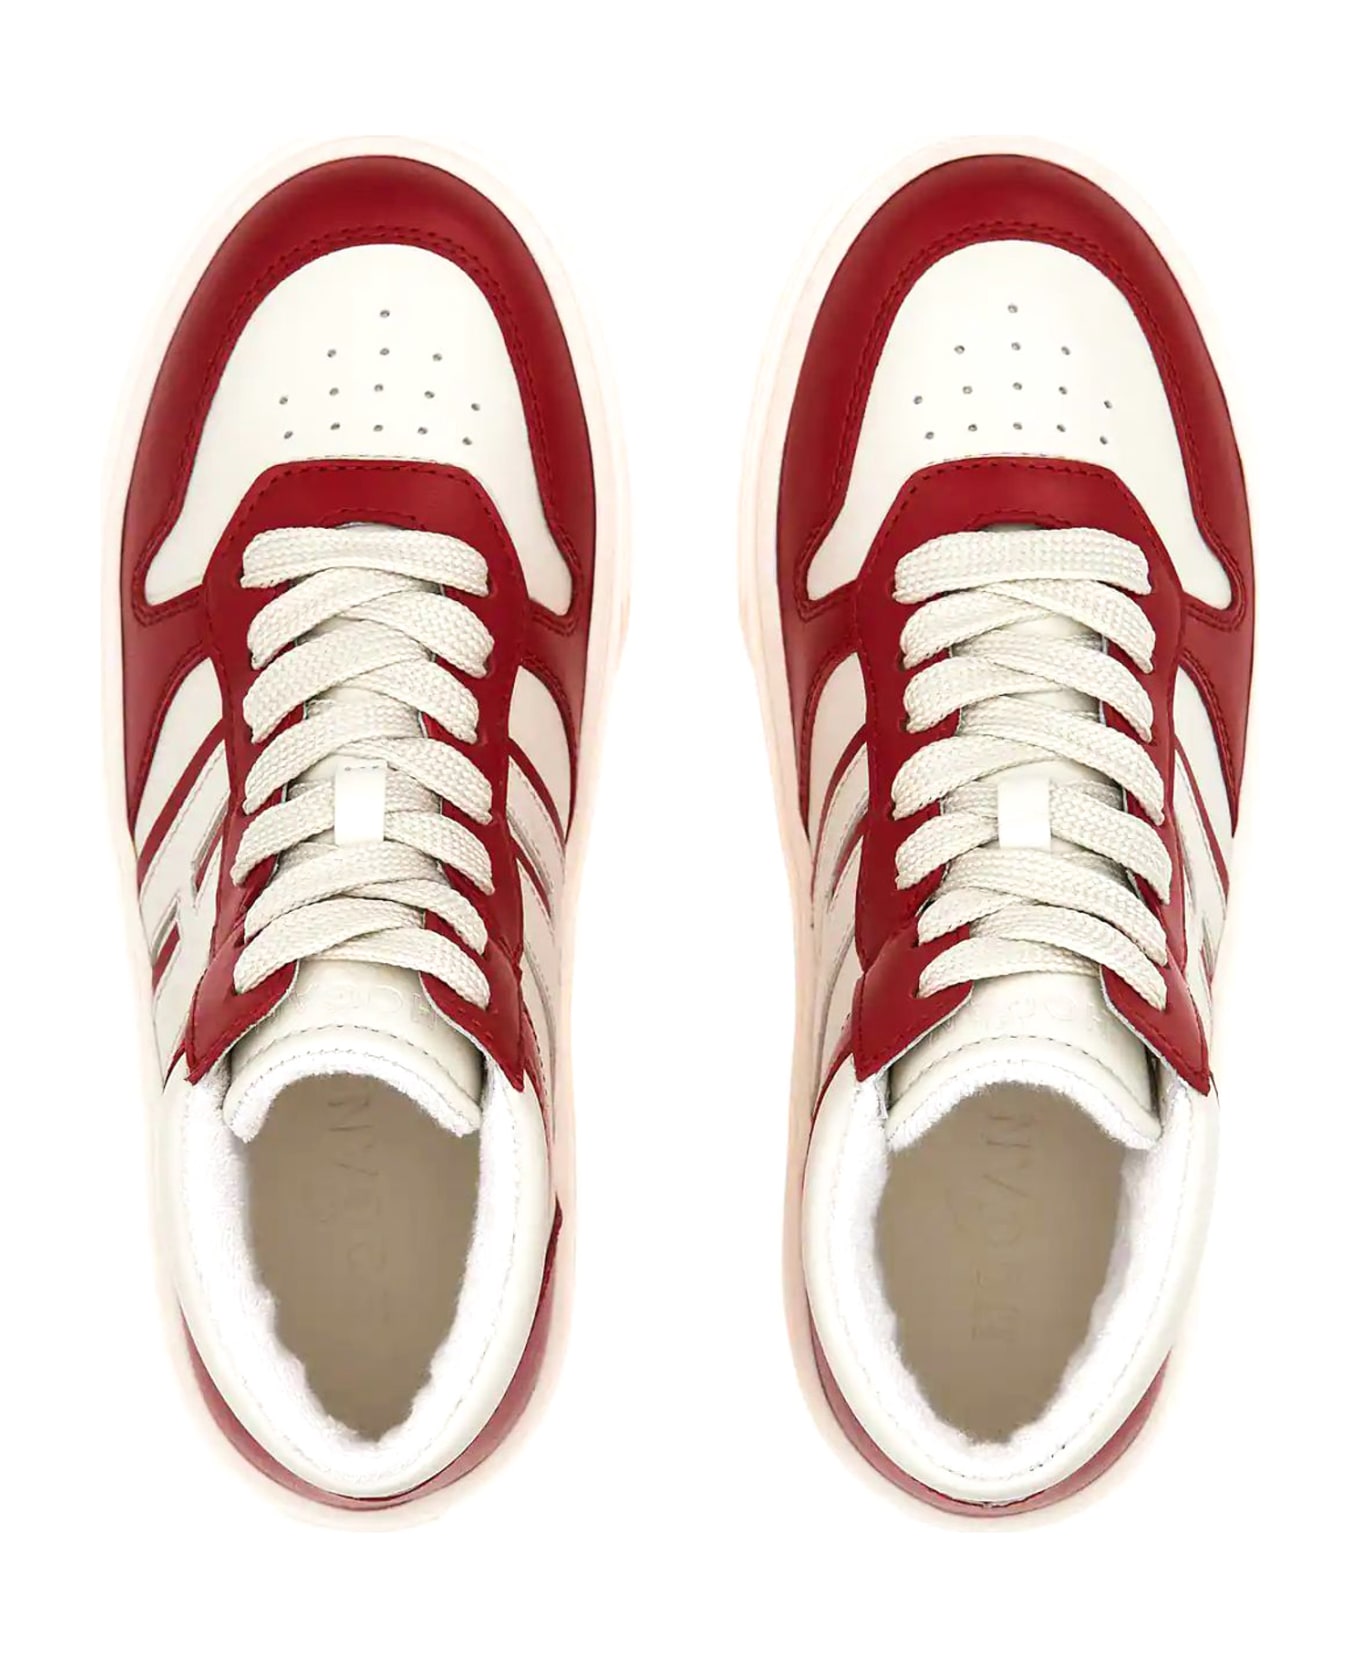 Hogan Sneakers Red - Red